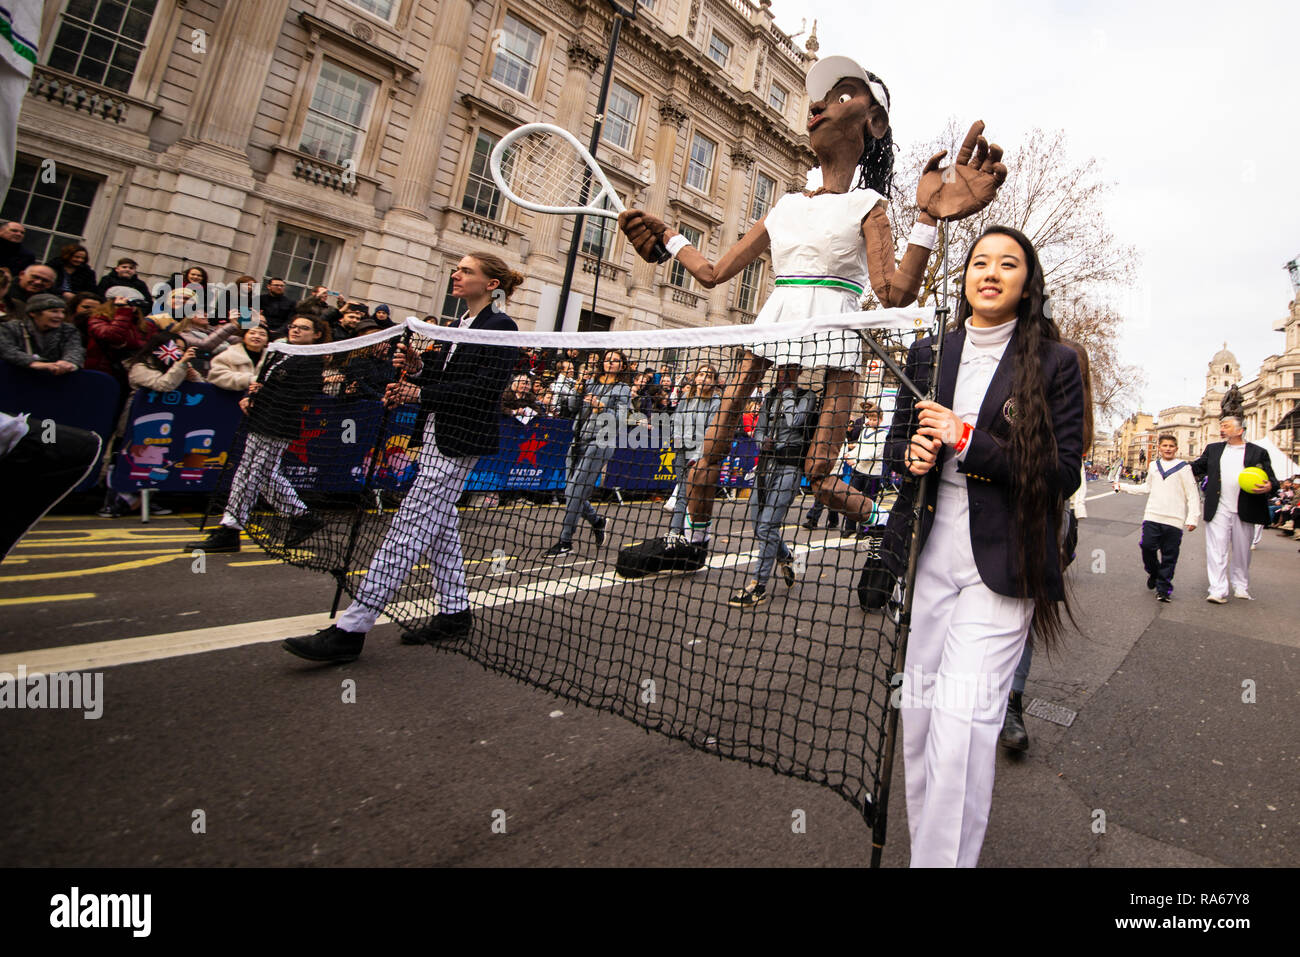 Tennis player effigies at London's New Year's Day Parade, UK. London Borough of Merton welcomes the world, Wimbledon theme figures Stock Photo